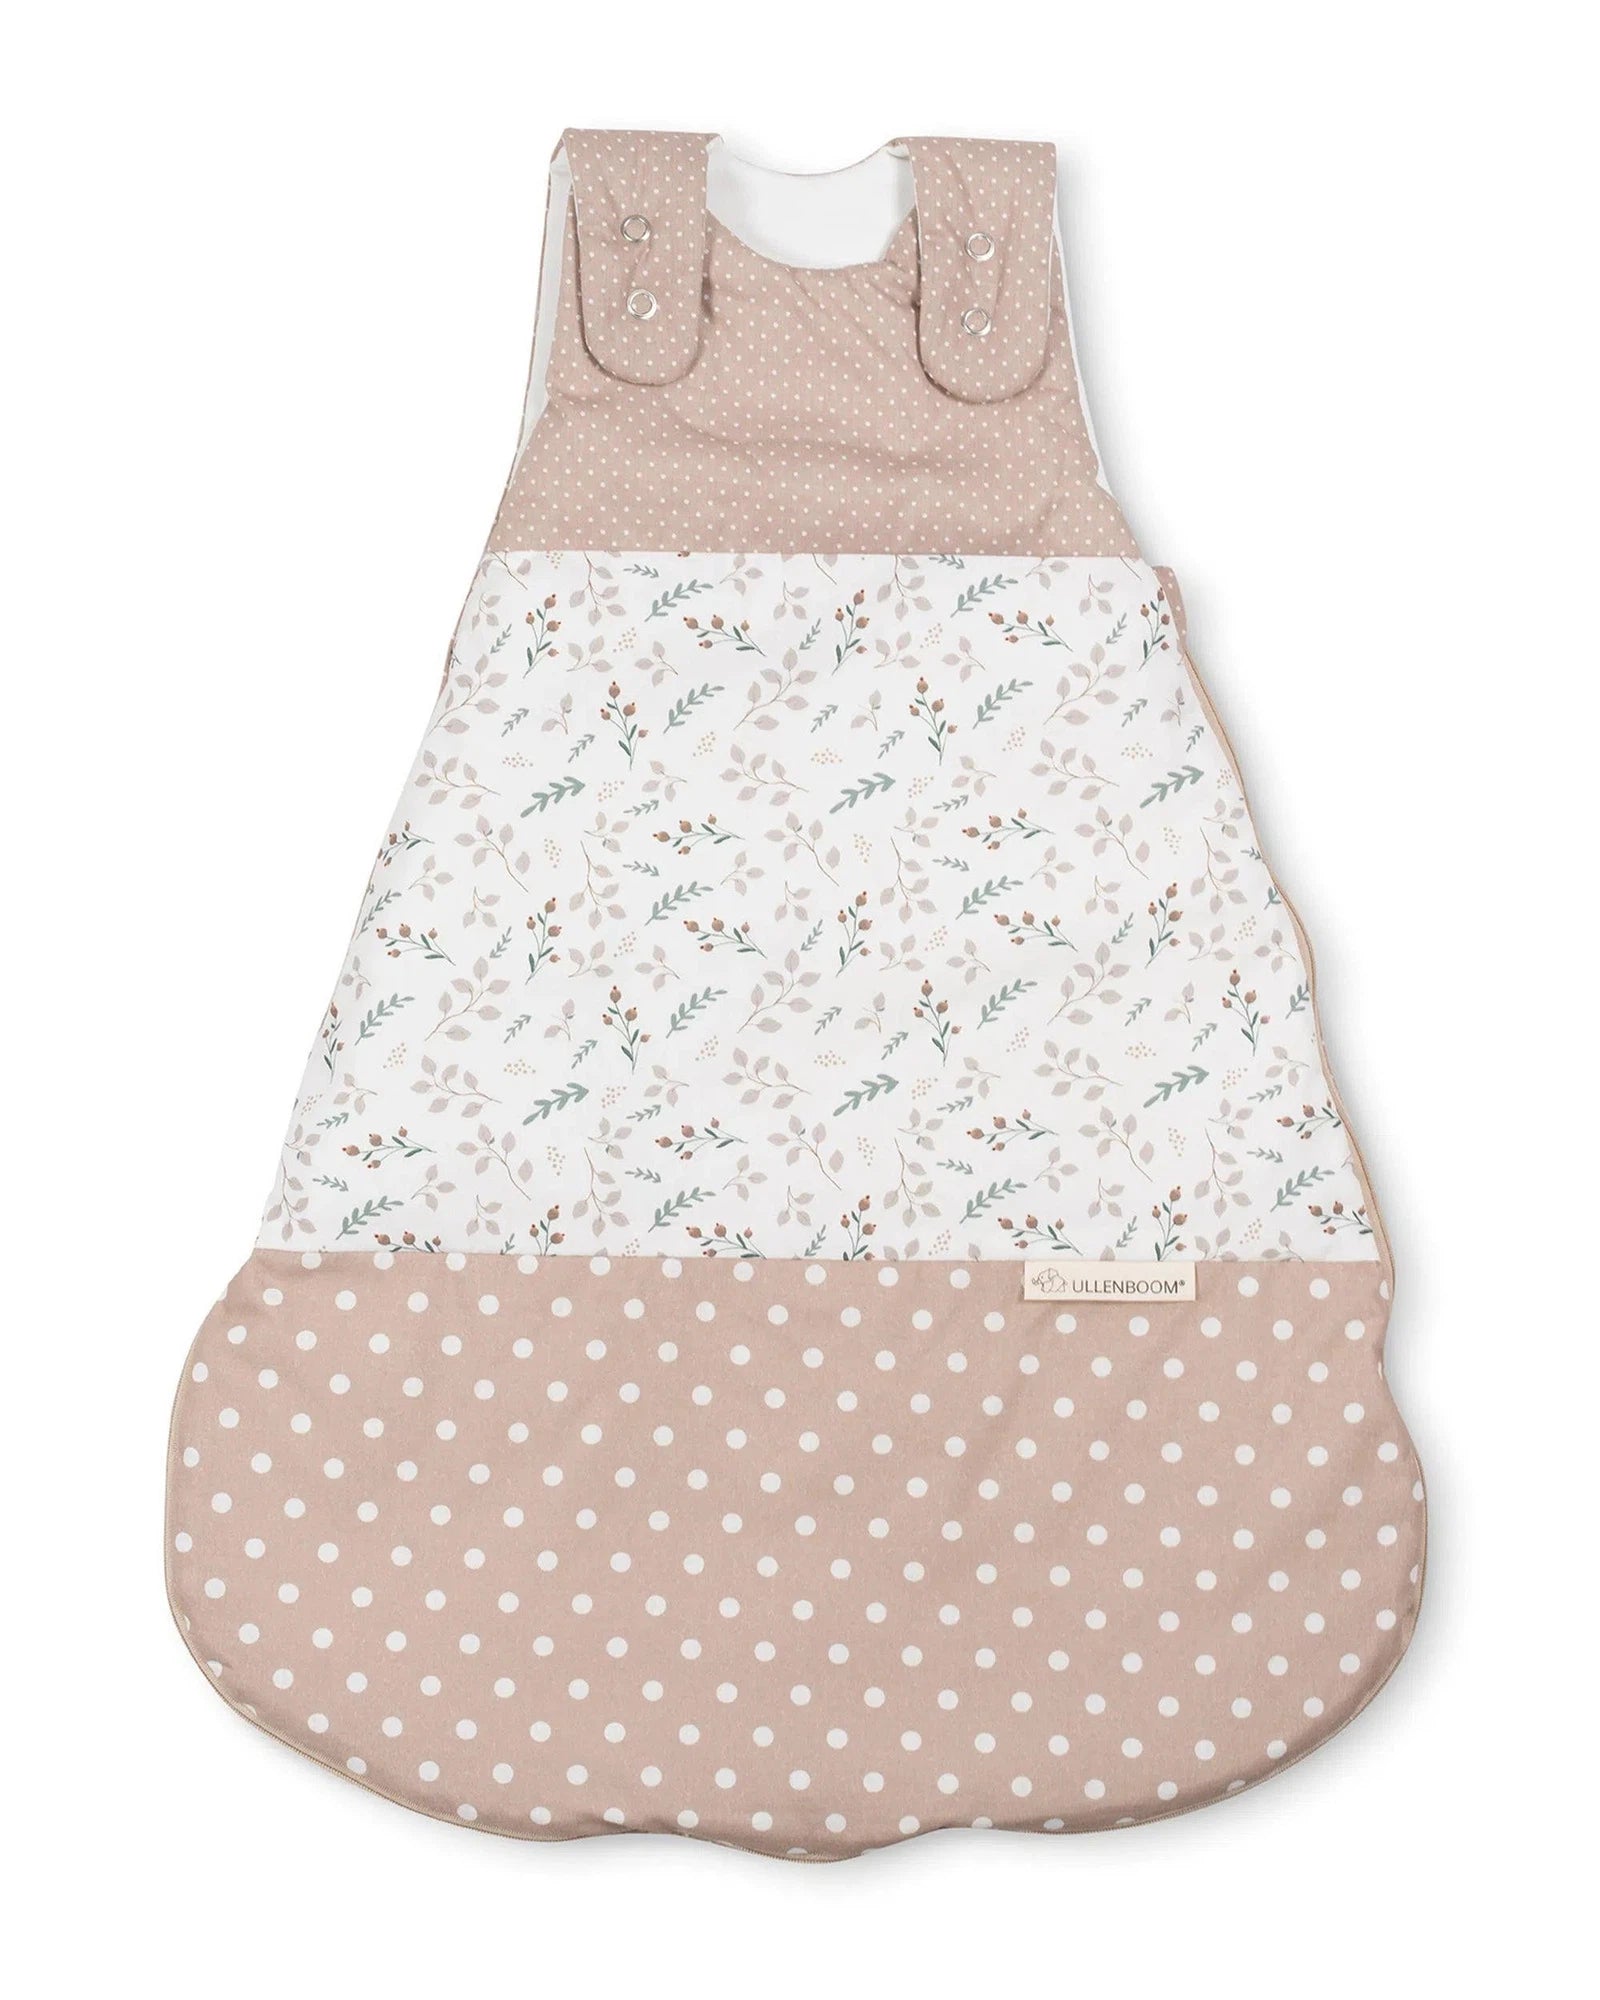 Baby Schlafsack SANDBLUME-ULLENBOOM-4-10 Monate | 68-74 cm-ULLENBOOM Baby